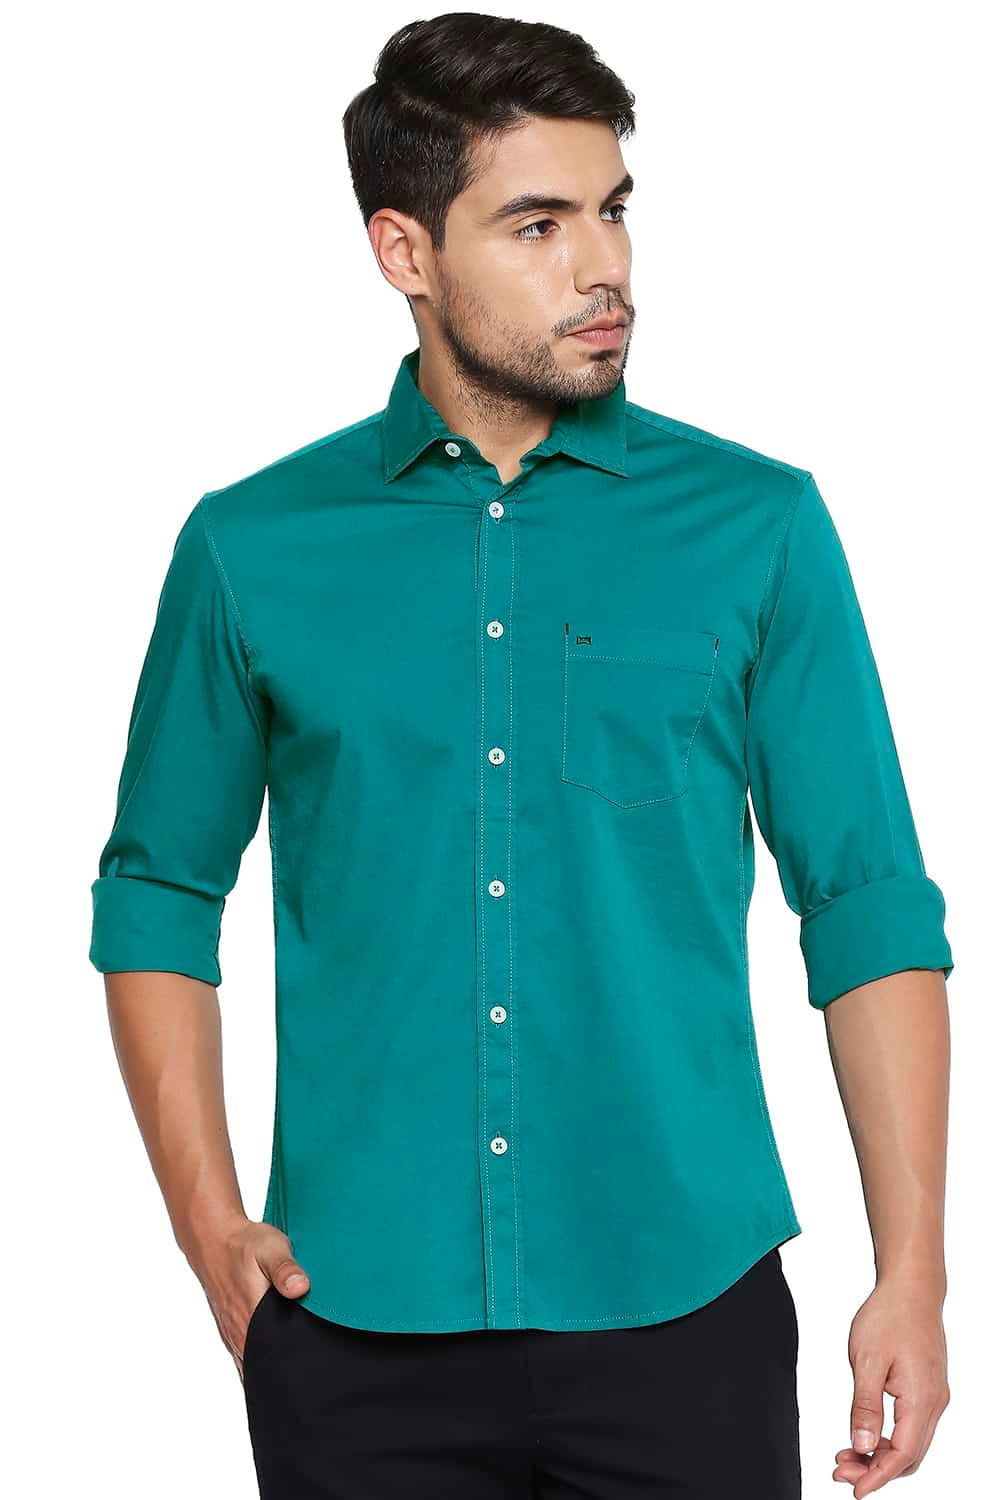 BASICS | Basics Slim Fit Navigate Green Stretch Shirt